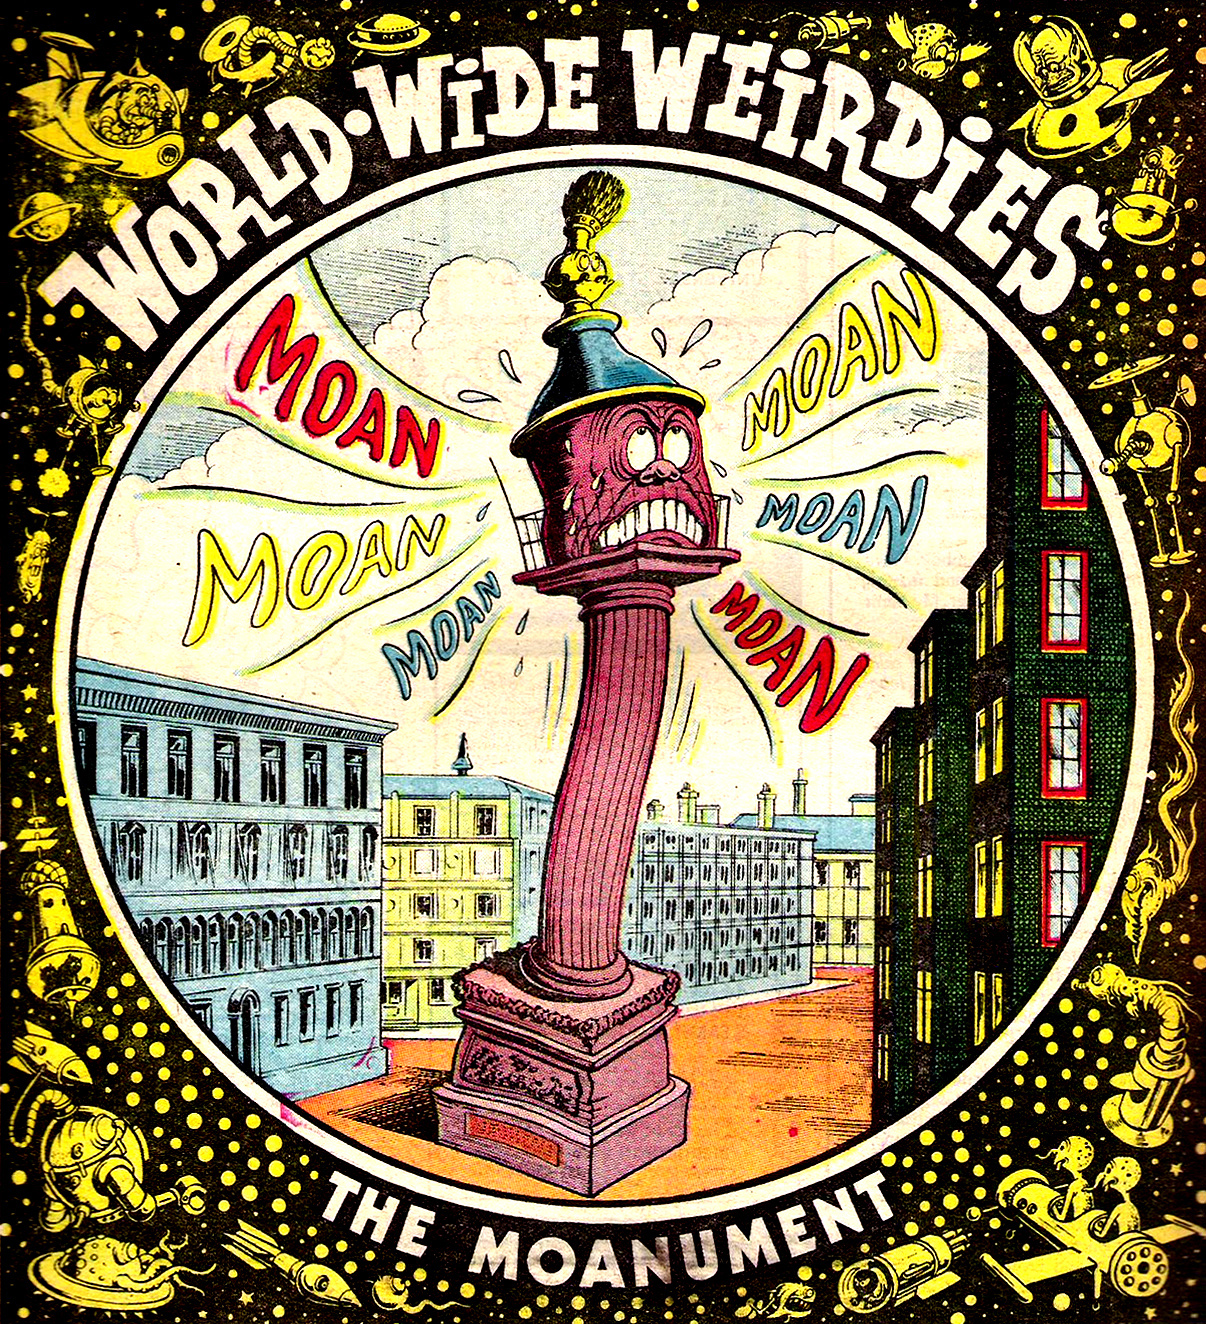 Ken Reid - World Wide Weirdies 69